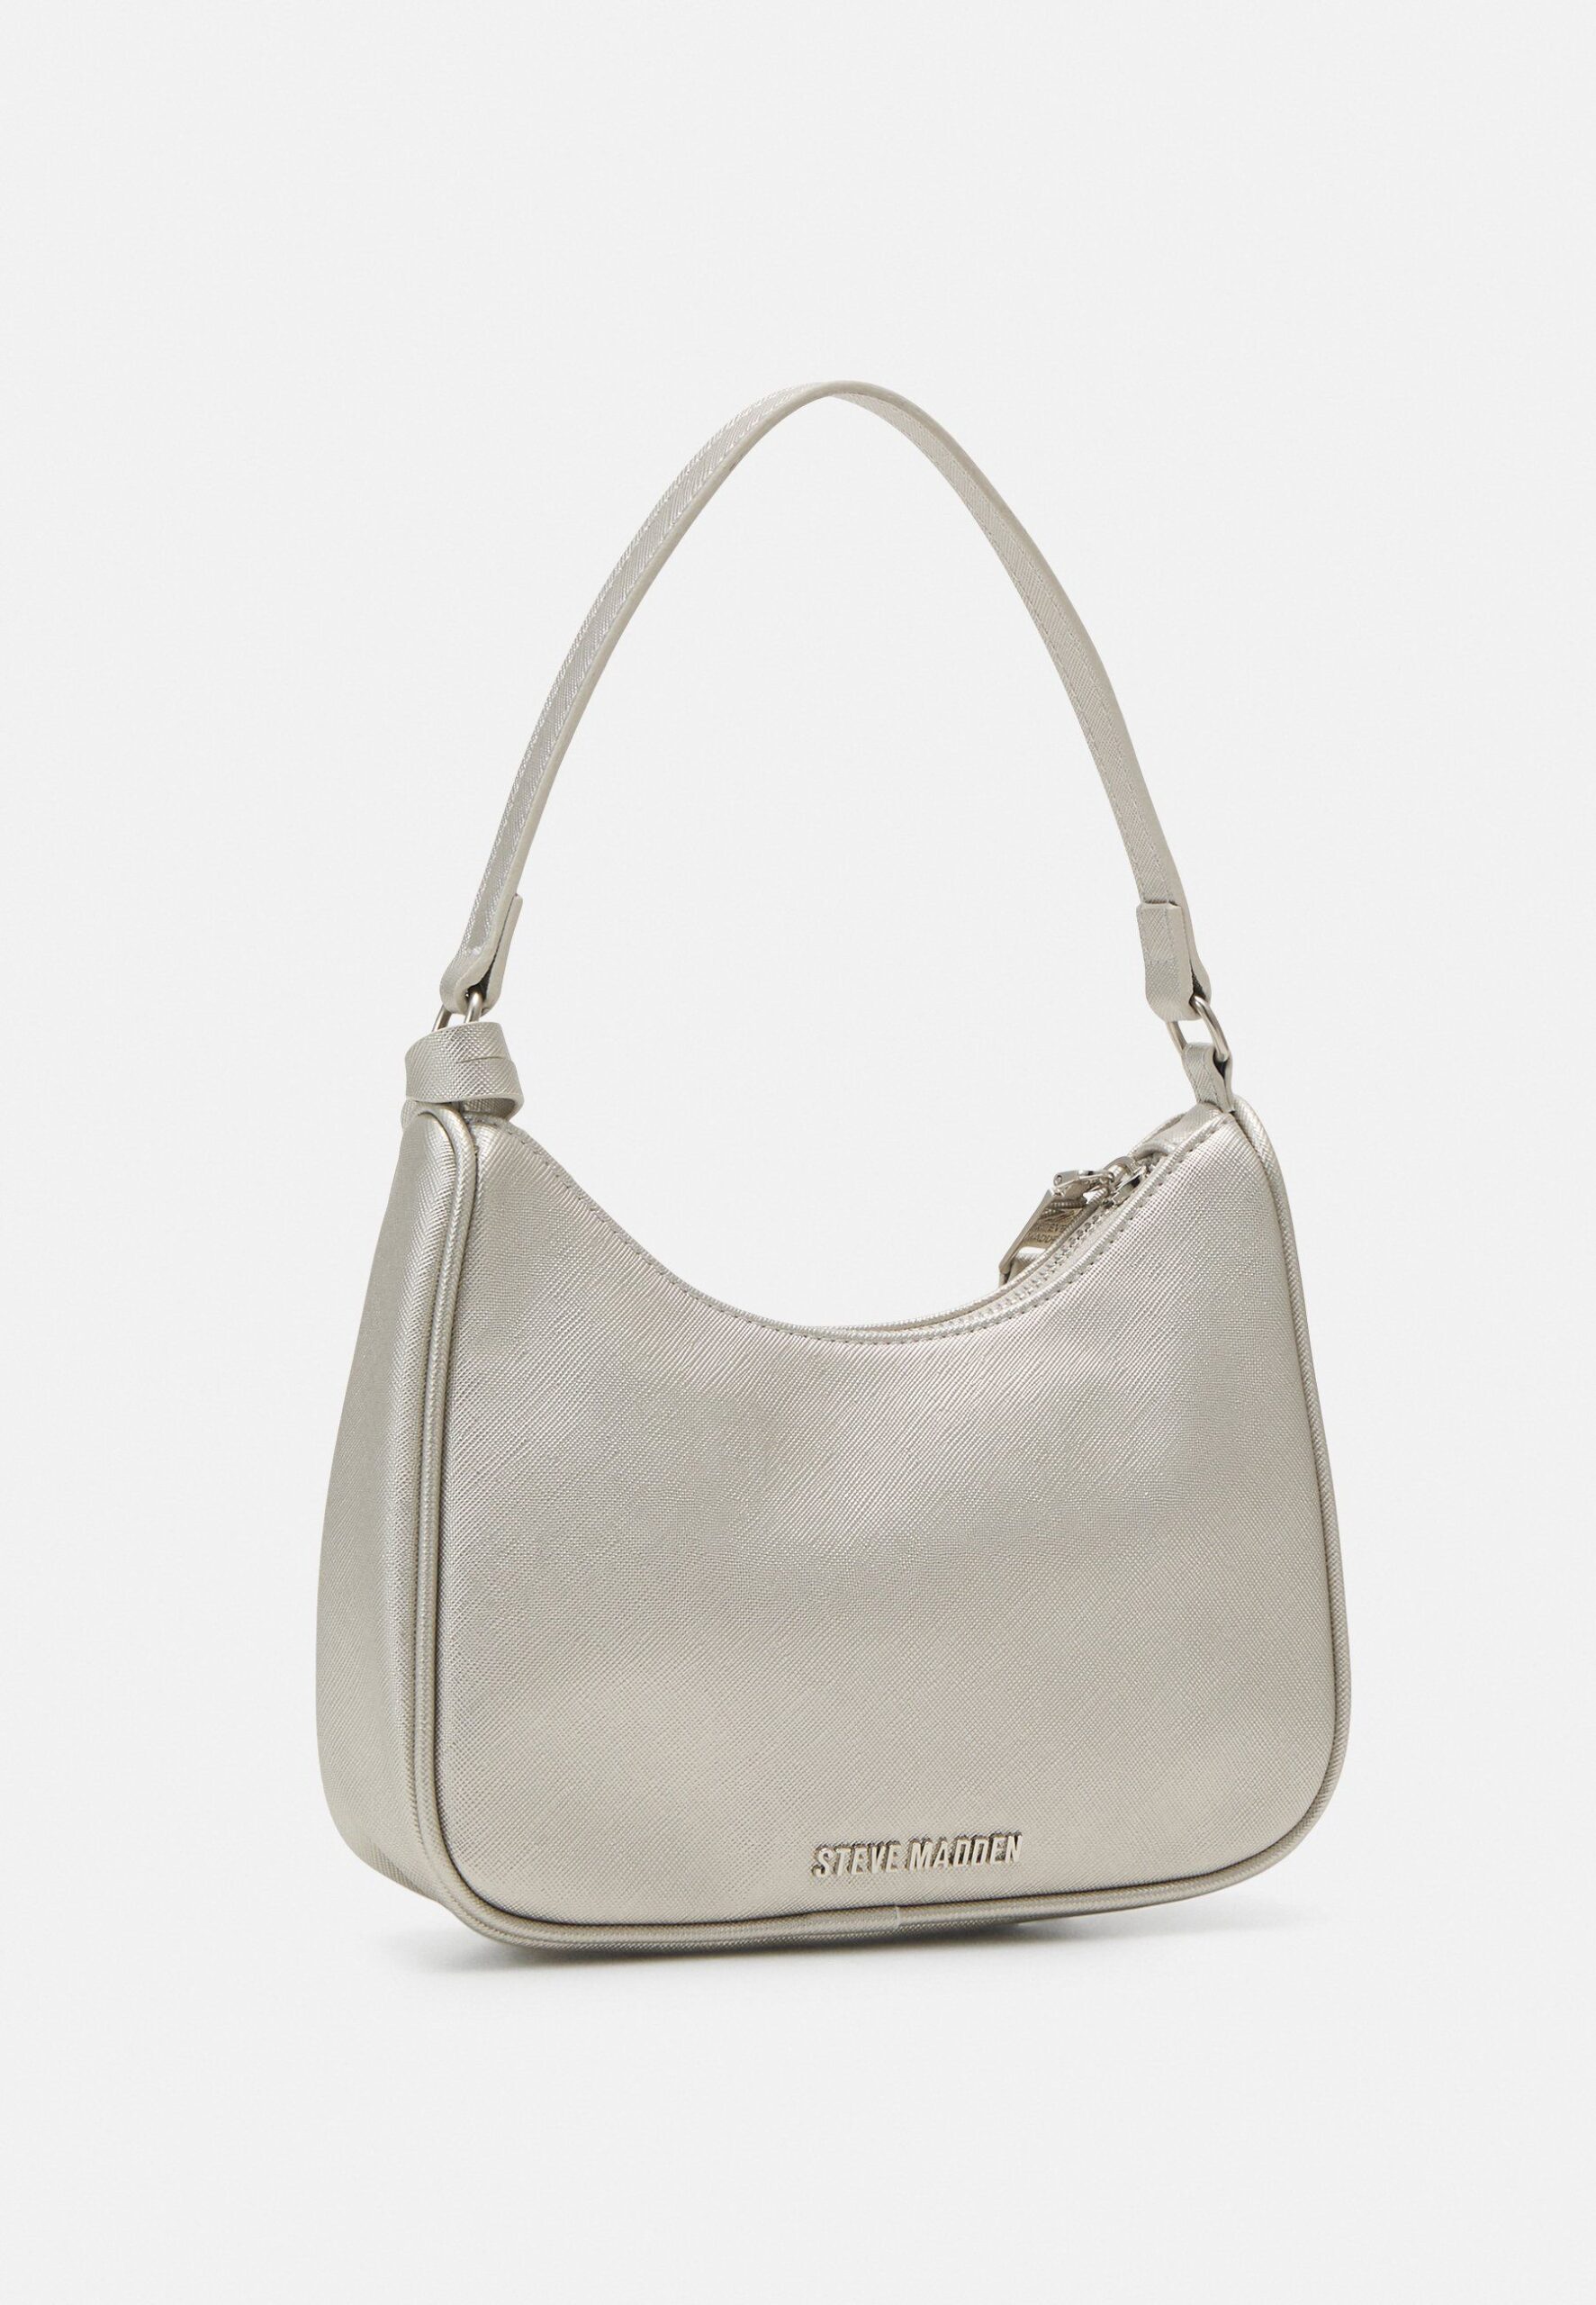 Go stylish with all season  silver
handbags